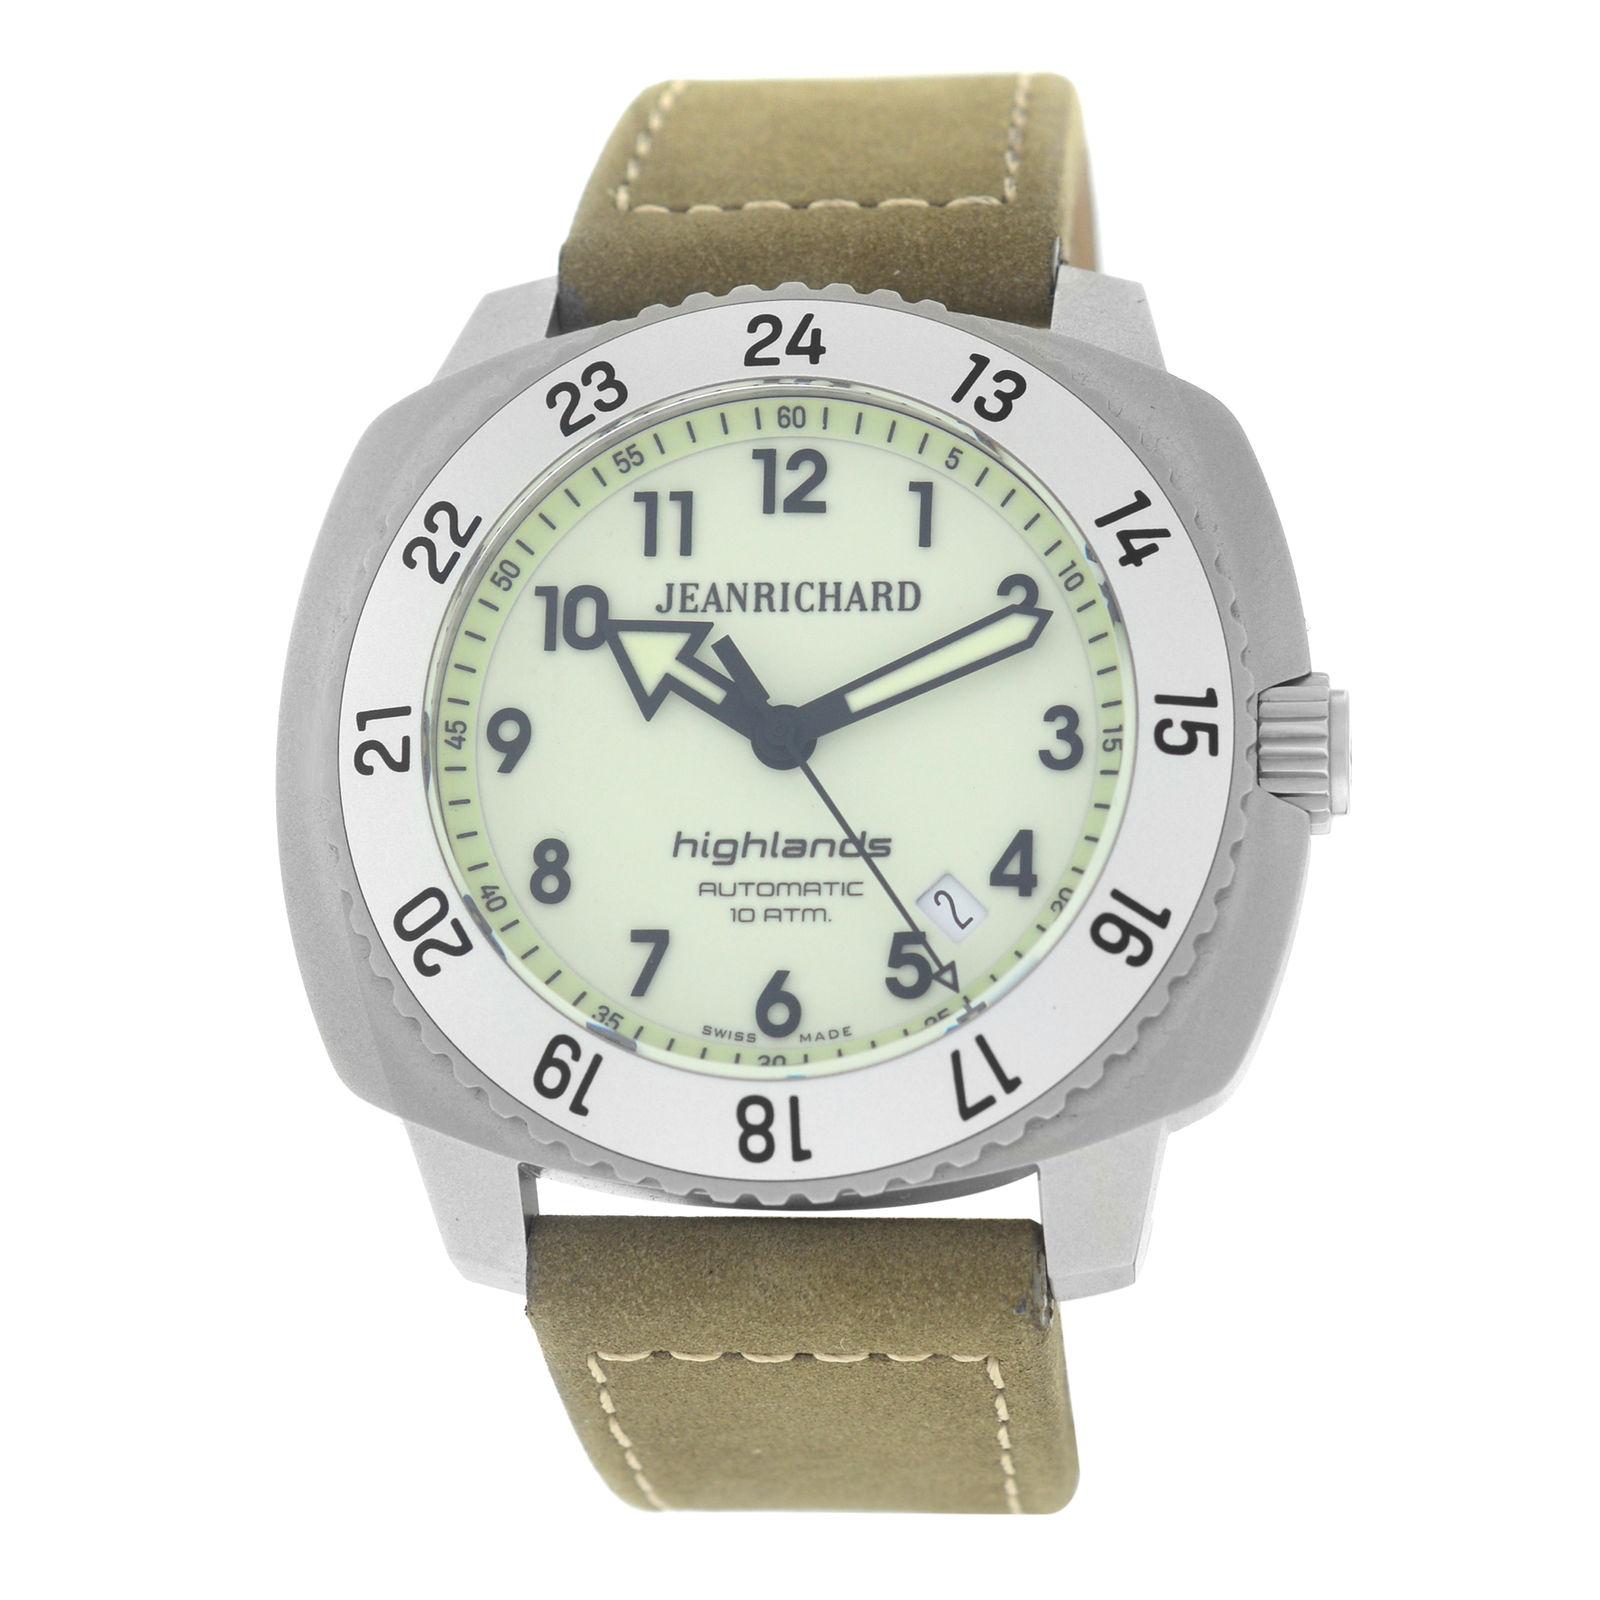 New Men's Daniel Jean Richard Highlands Steel Automatic Watch For Sale